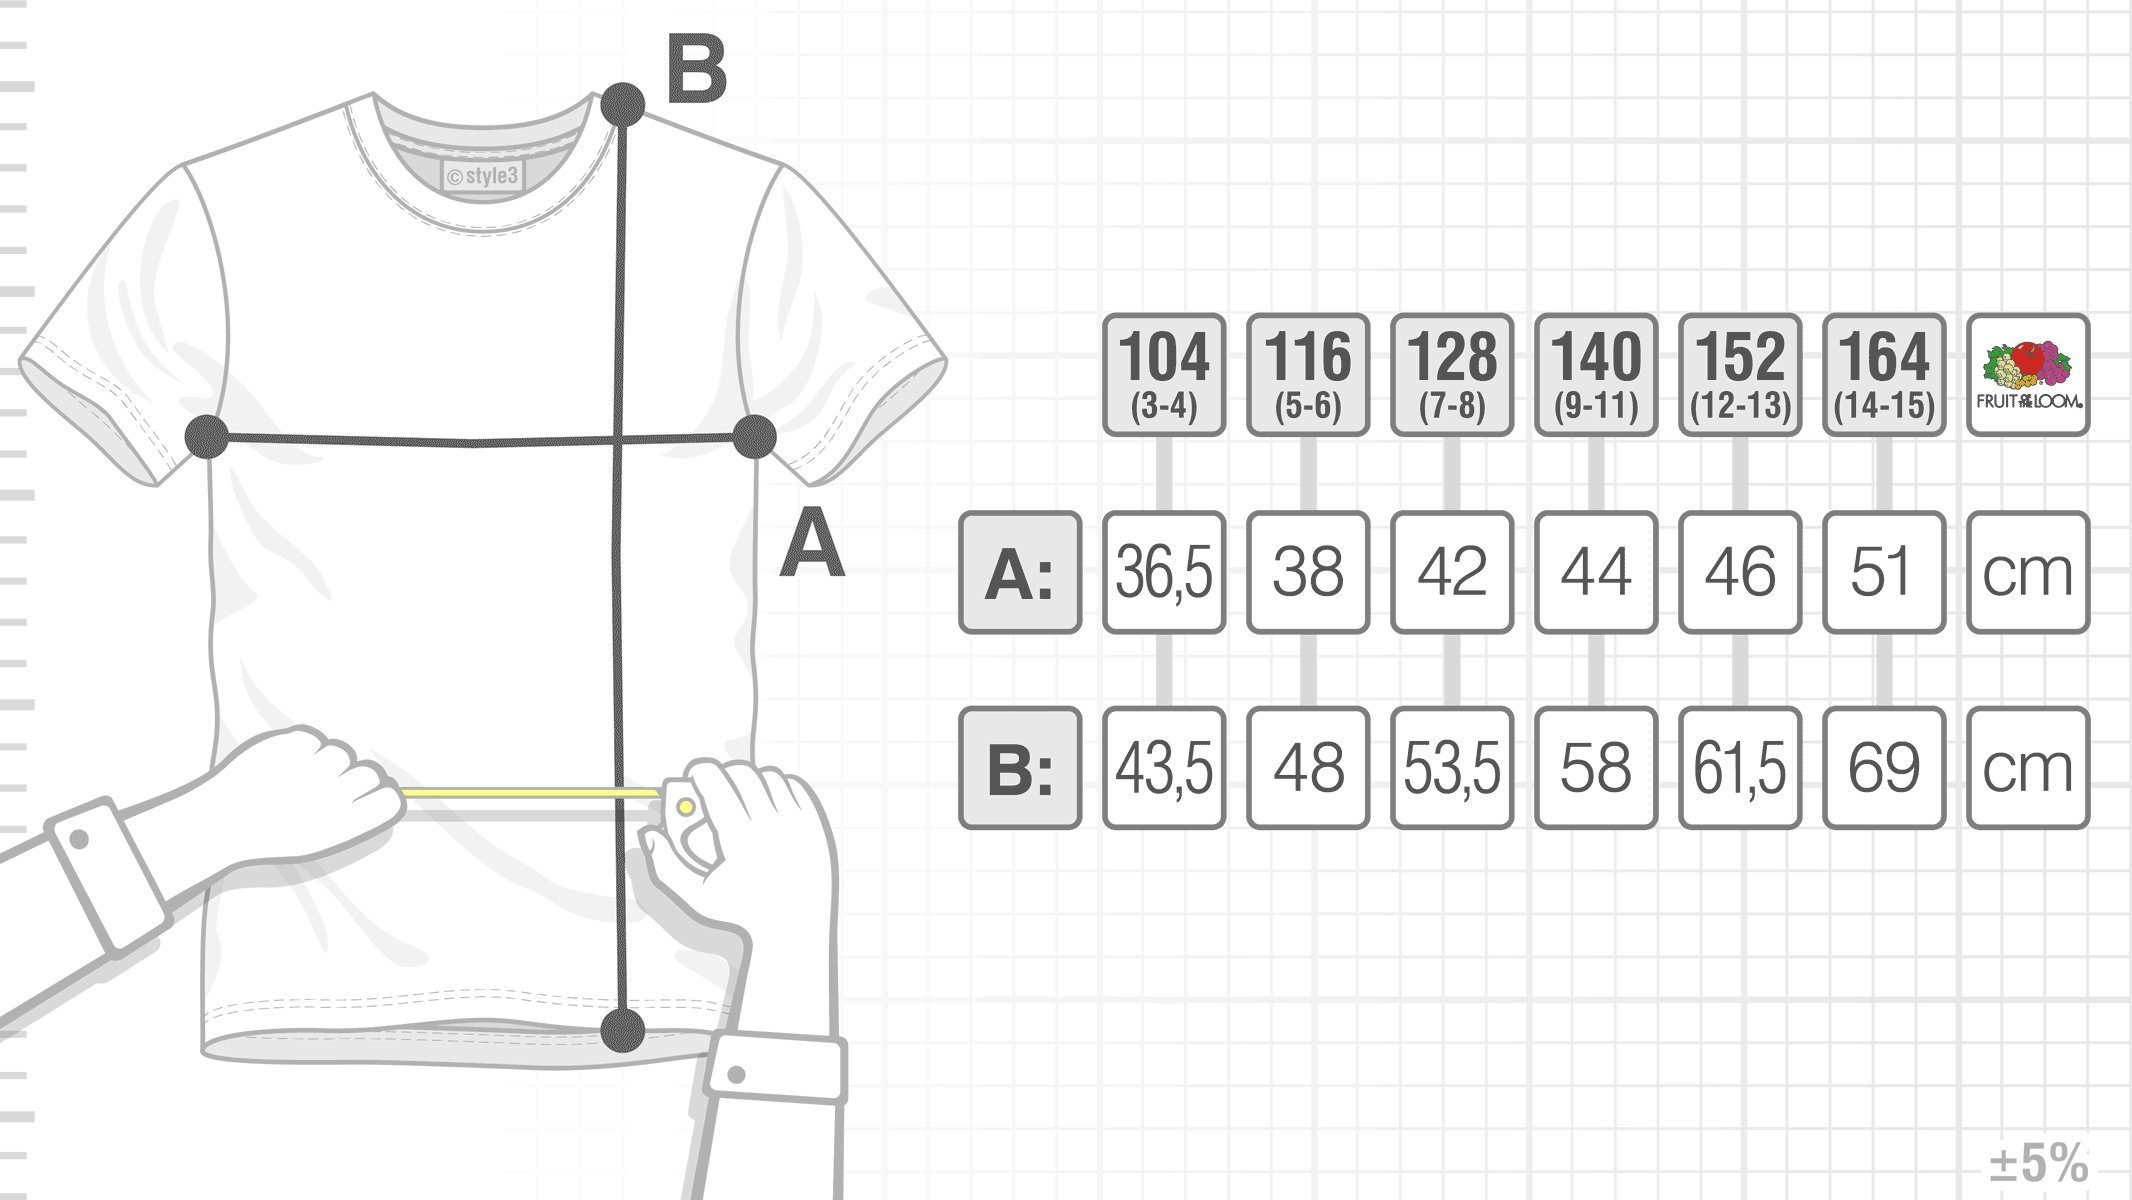 style3 switch T-Shirt ultimate Smash Kinder Print-Shirt Brawler bros